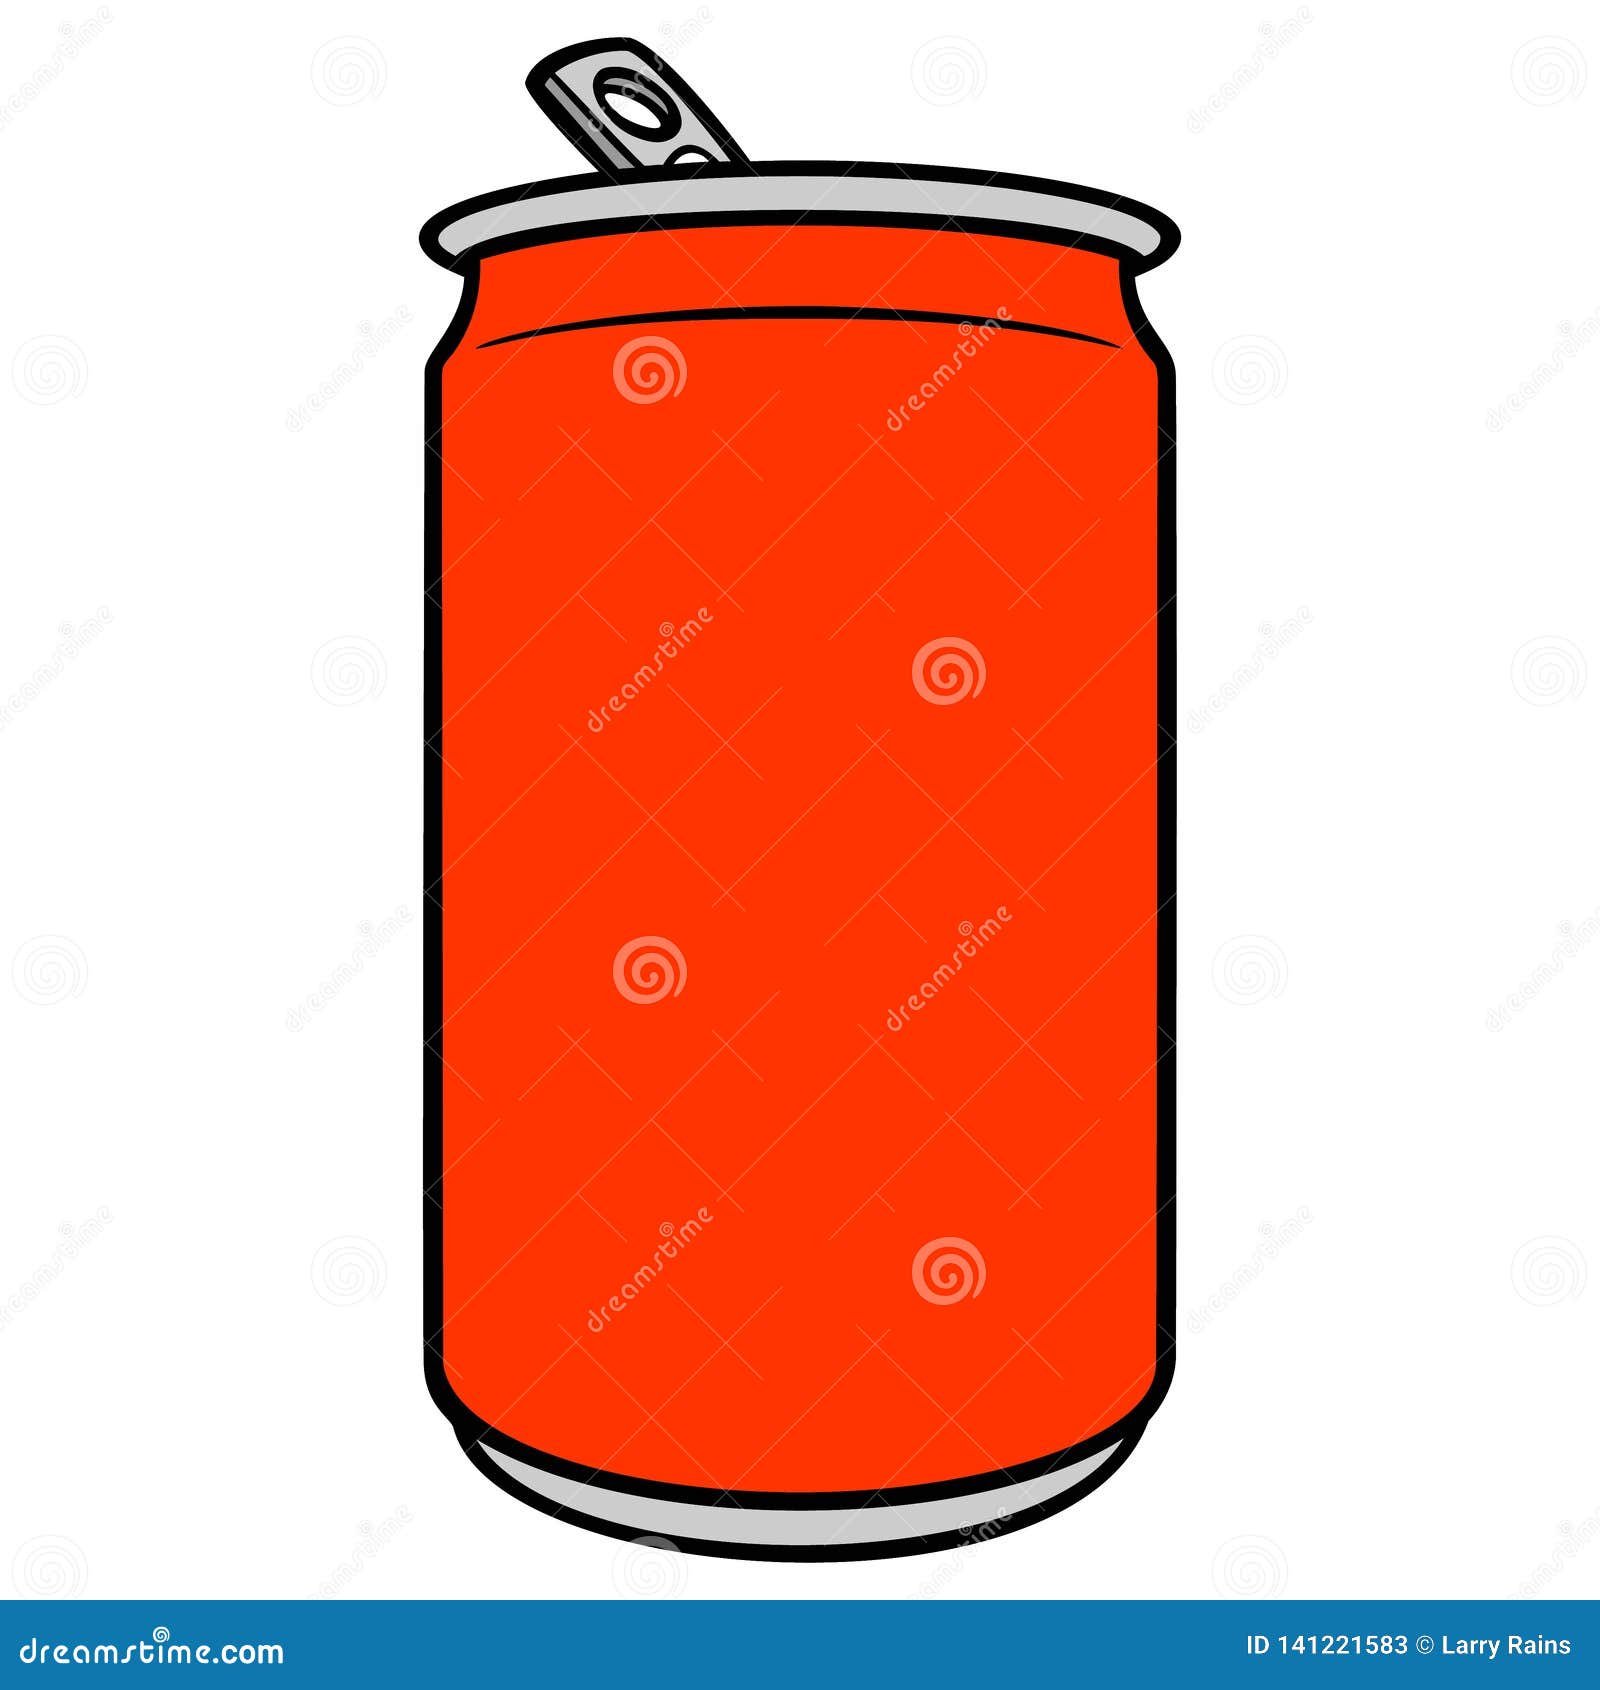 Soda Can Cartoon stock vector. Illustration of alcohol - 141221583